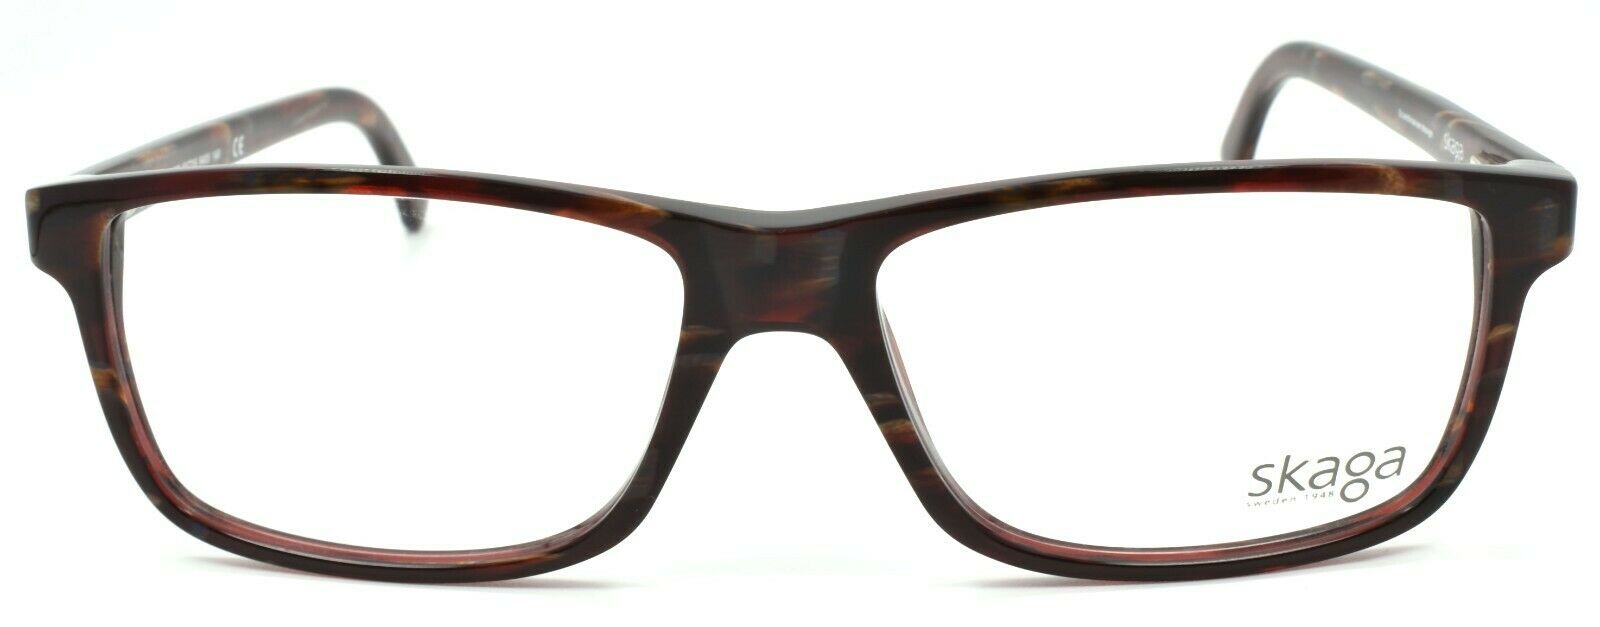 2-Skaga 2508 Dager 9405 Men's Eyeglasses Frames 56-16-140 Brown-IKSpecs